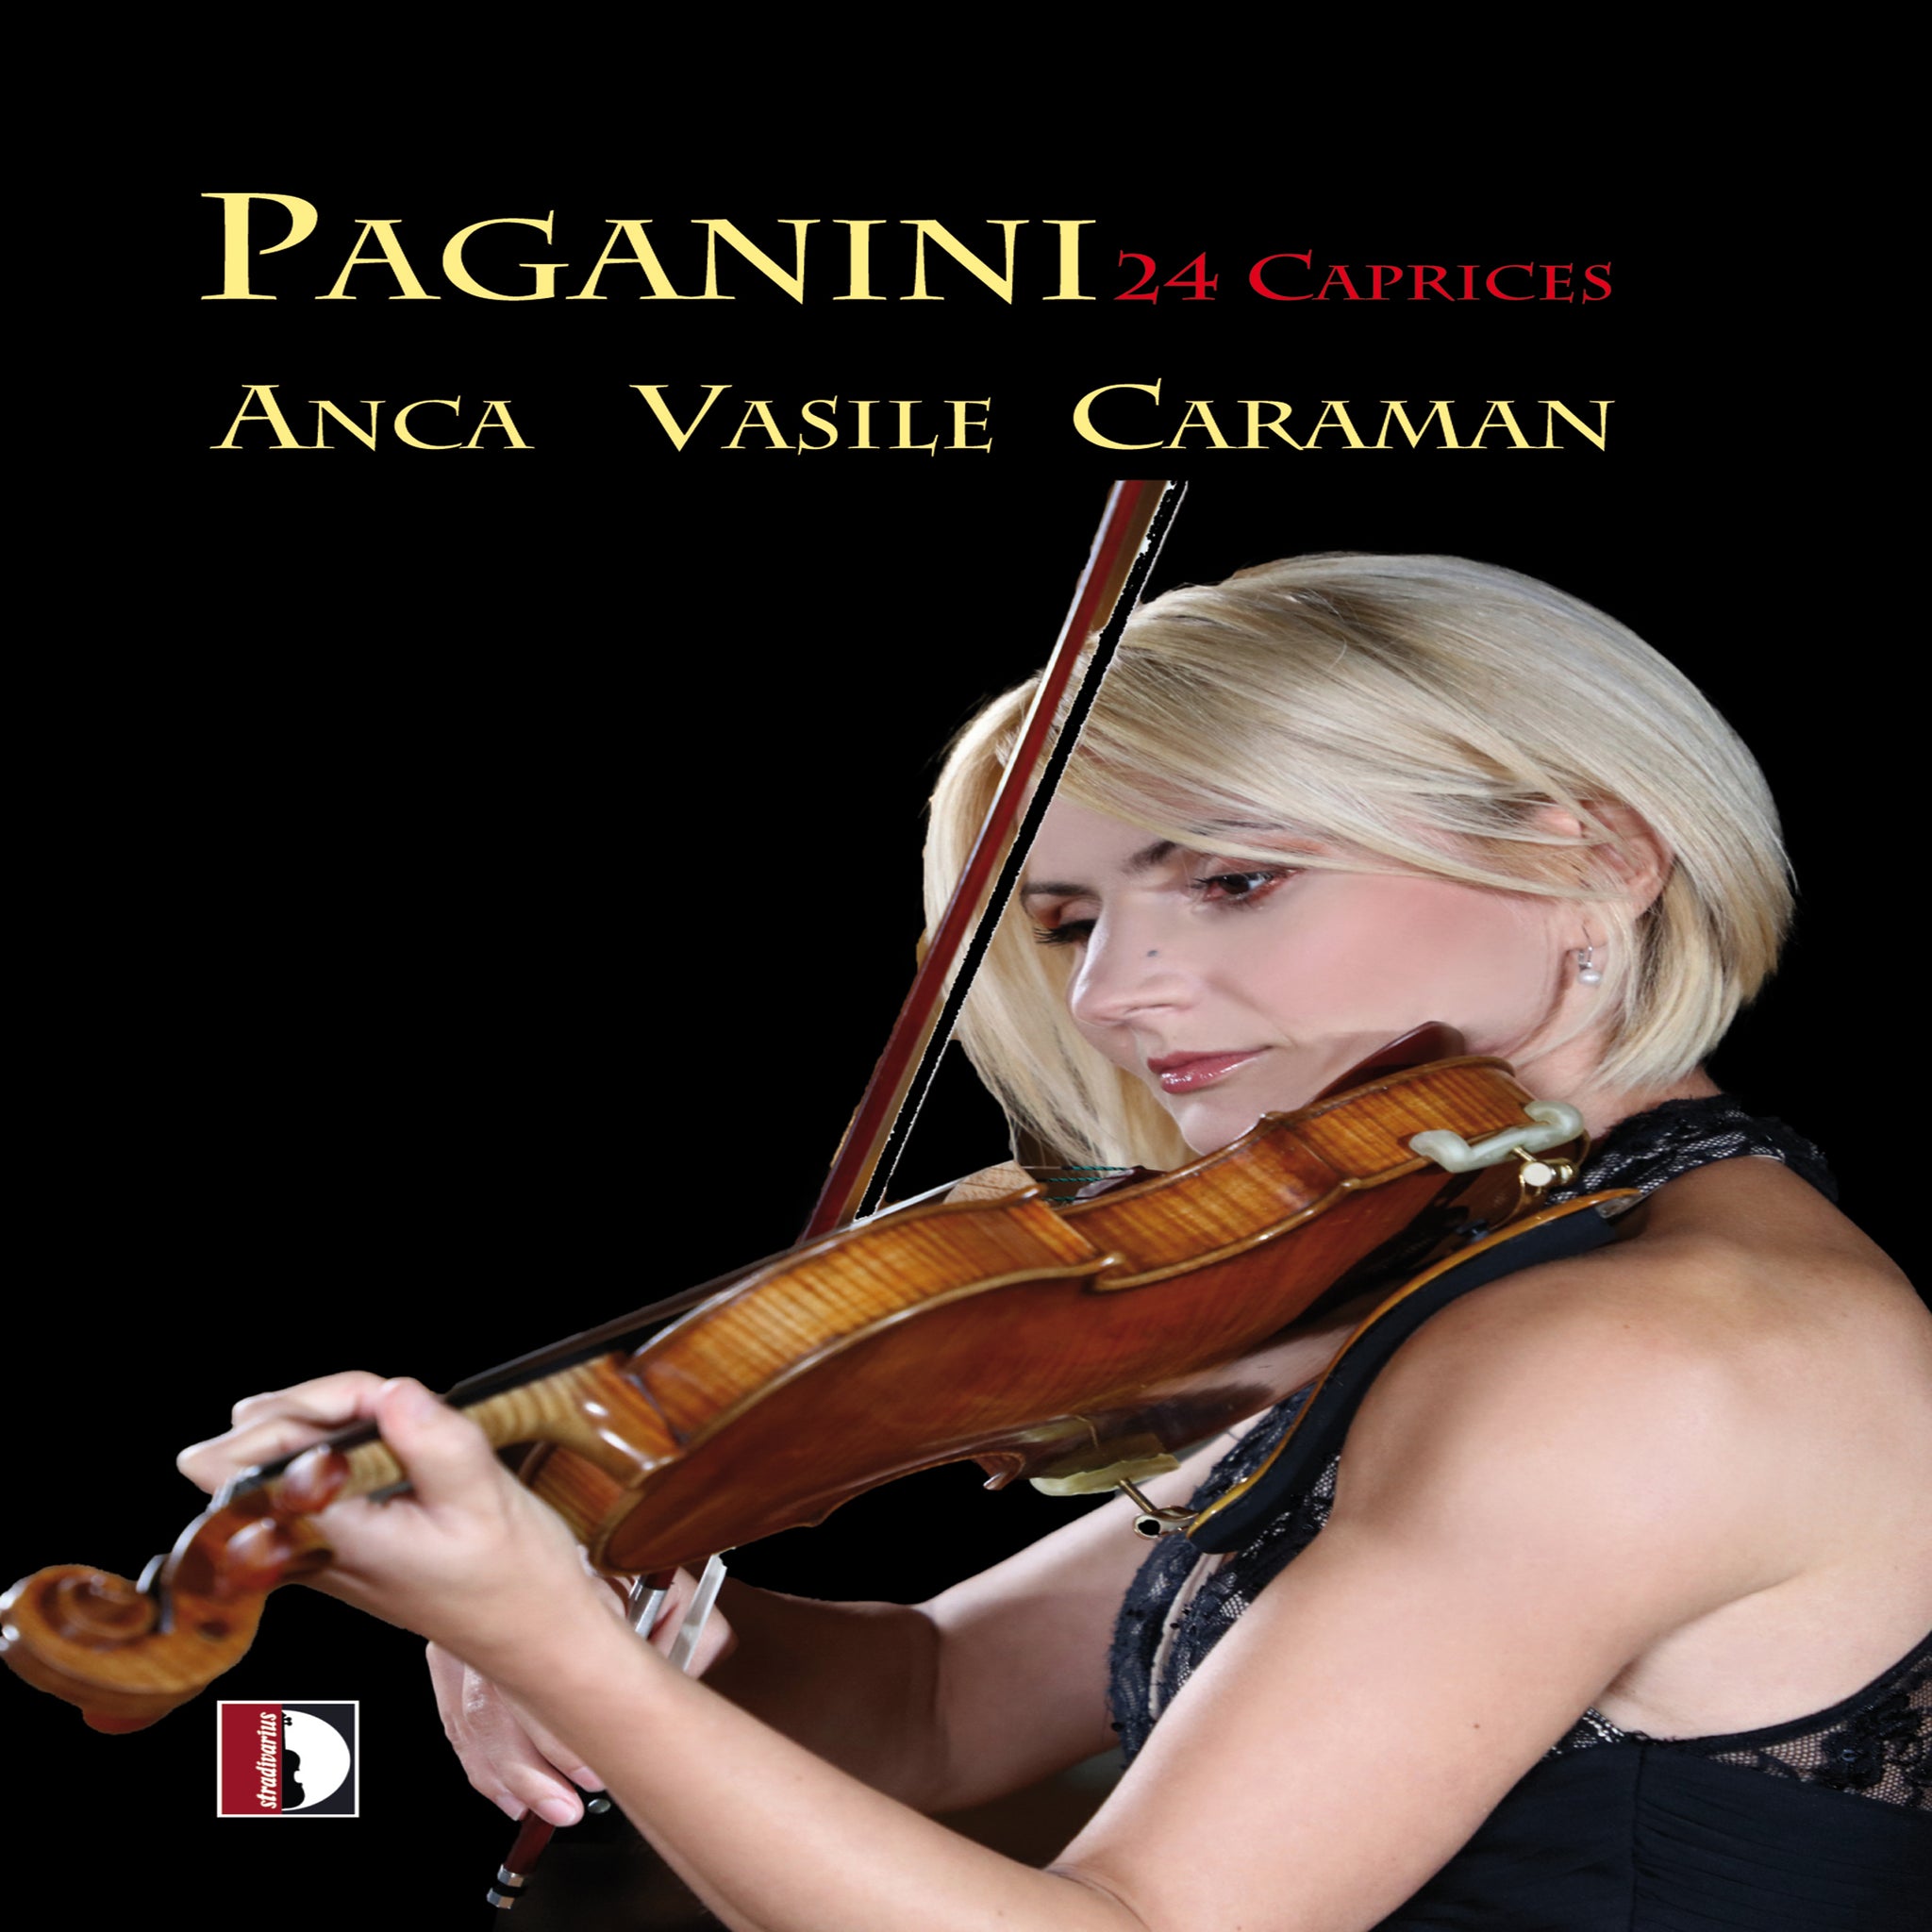 Paganini: 24 Caprices on Video / Anca Vasile Caraman